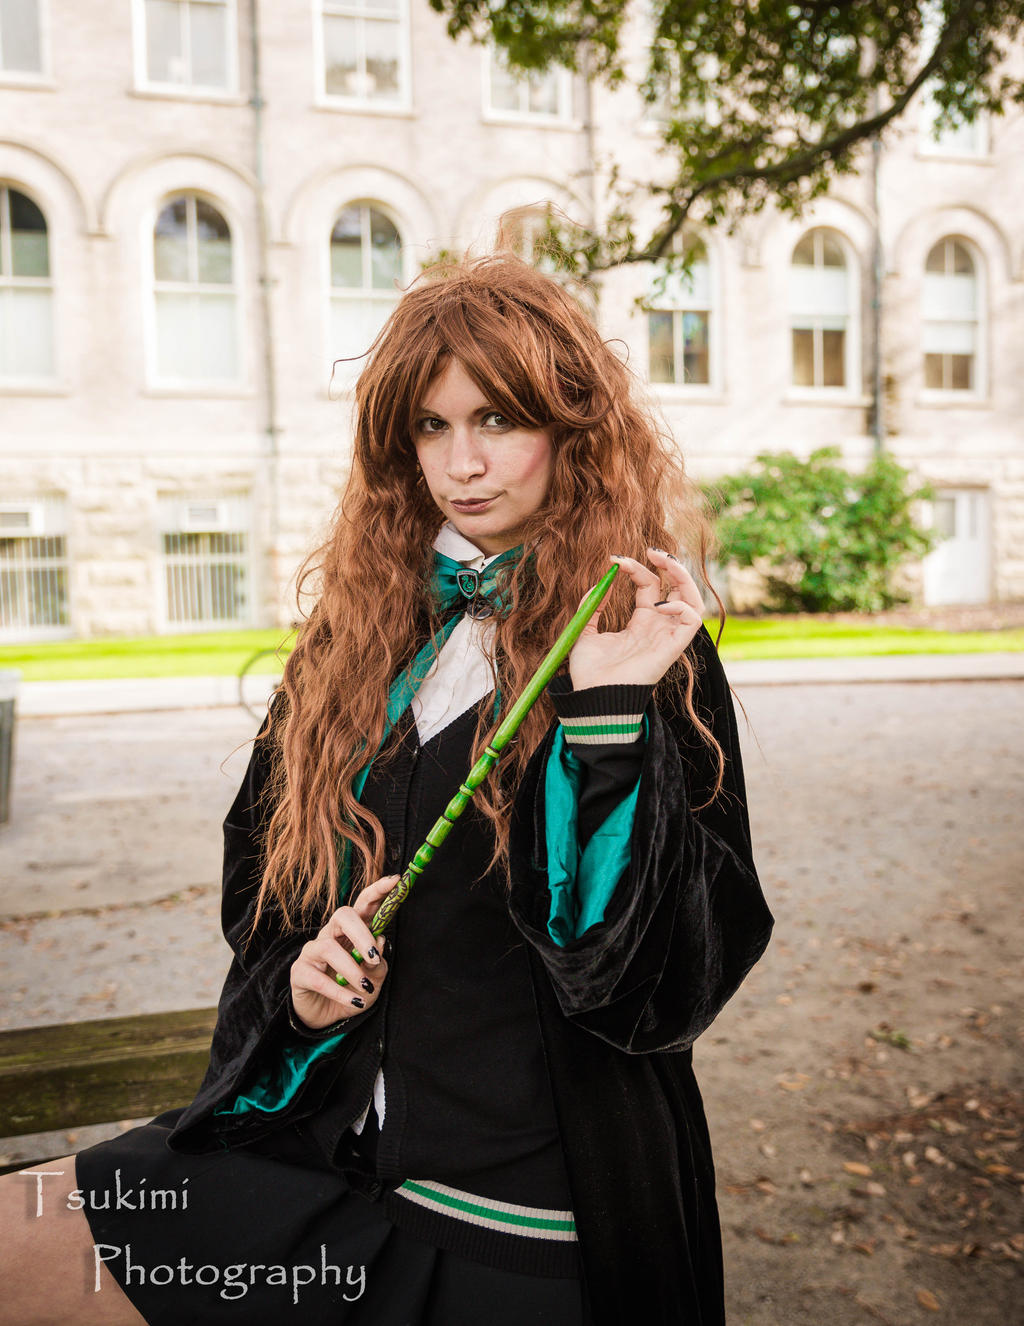 Hermione's magic wand by heinana on DeviantArt